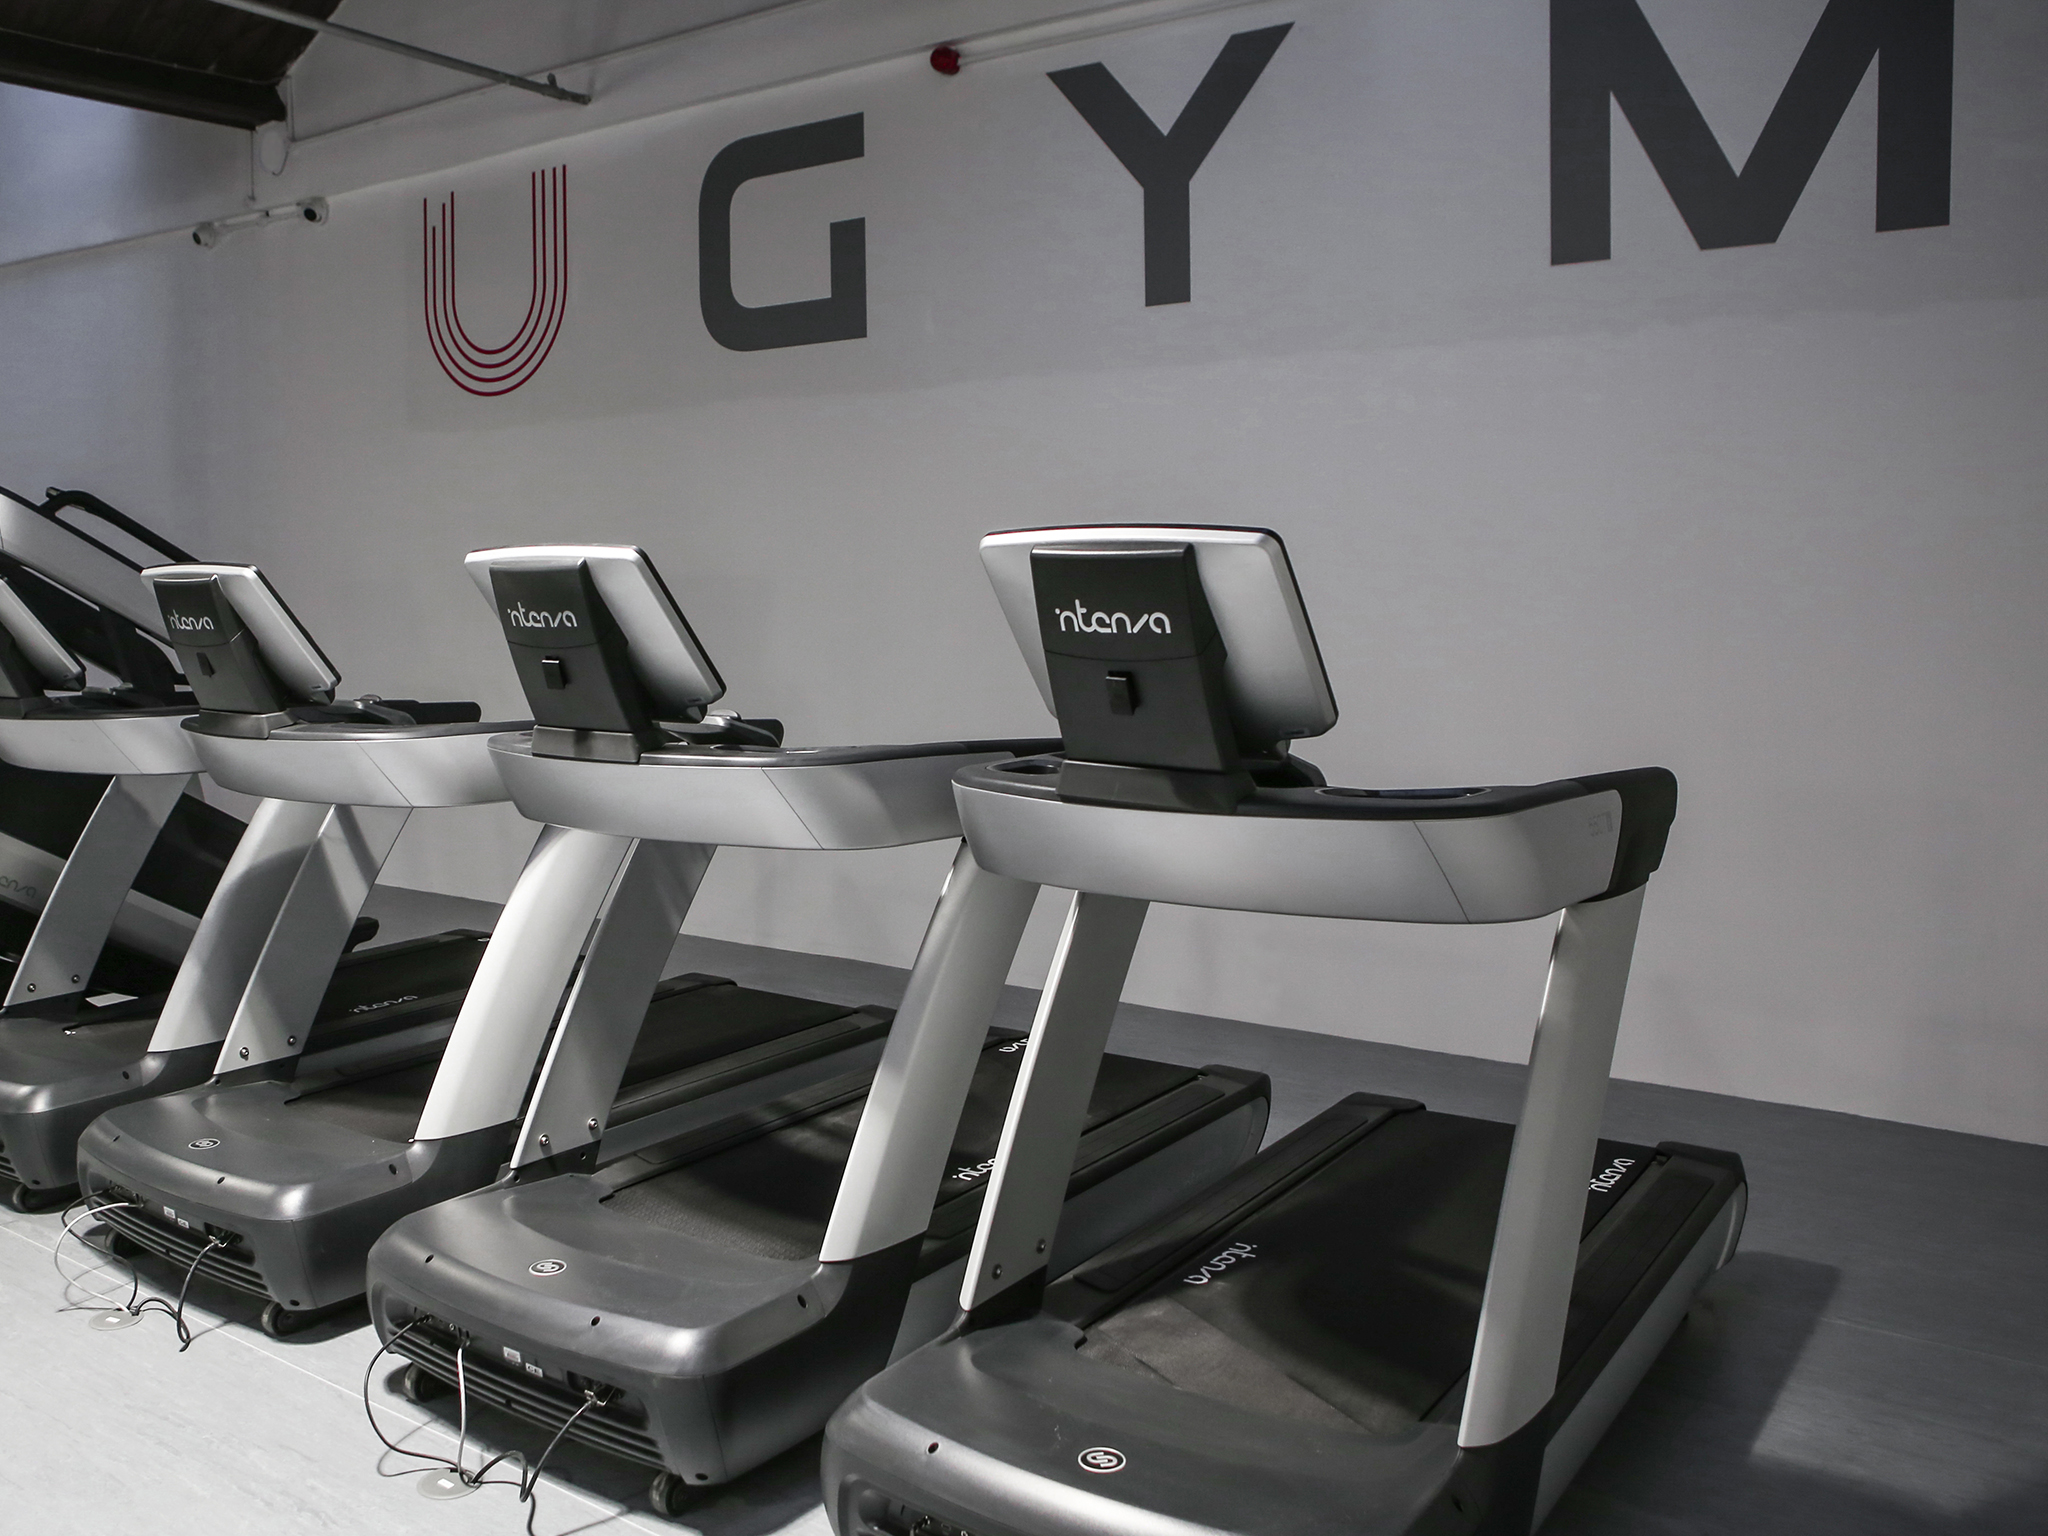 Intenza Treadmill Cardio Line installed in uGym in Scotland